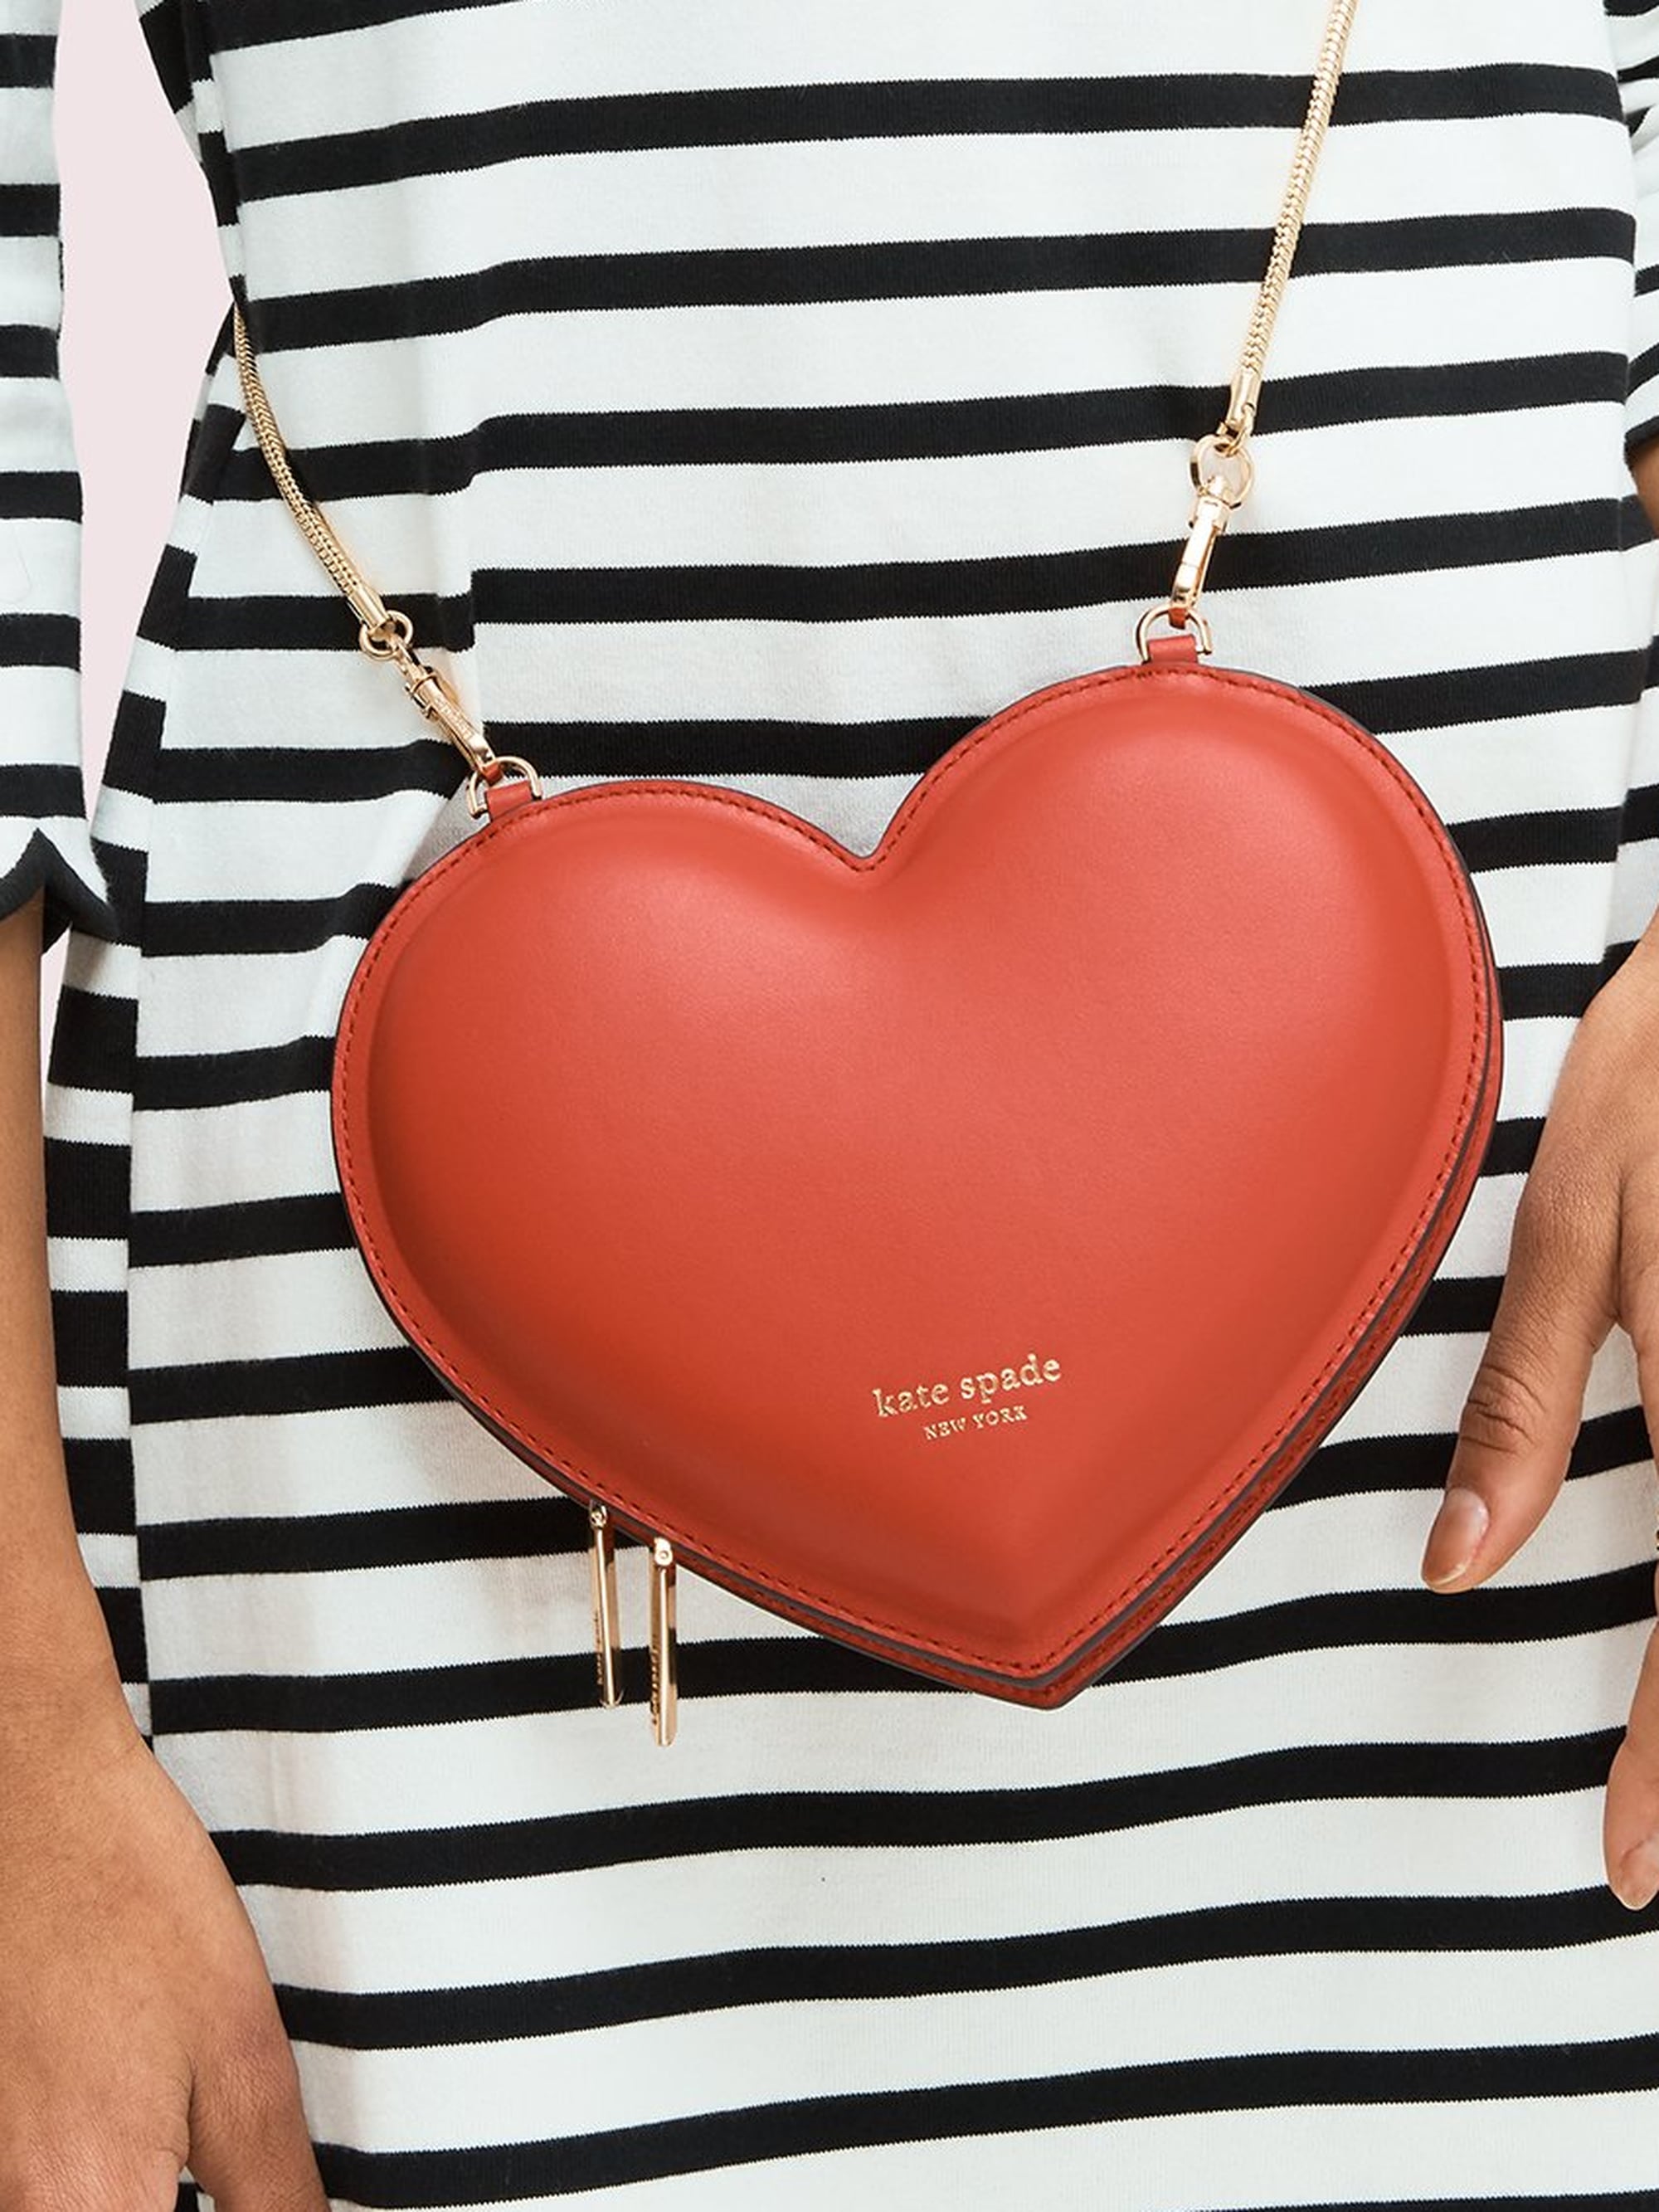 The Best Kate Spade Valentine's Day Deals: Shop Handbags, Pajamas